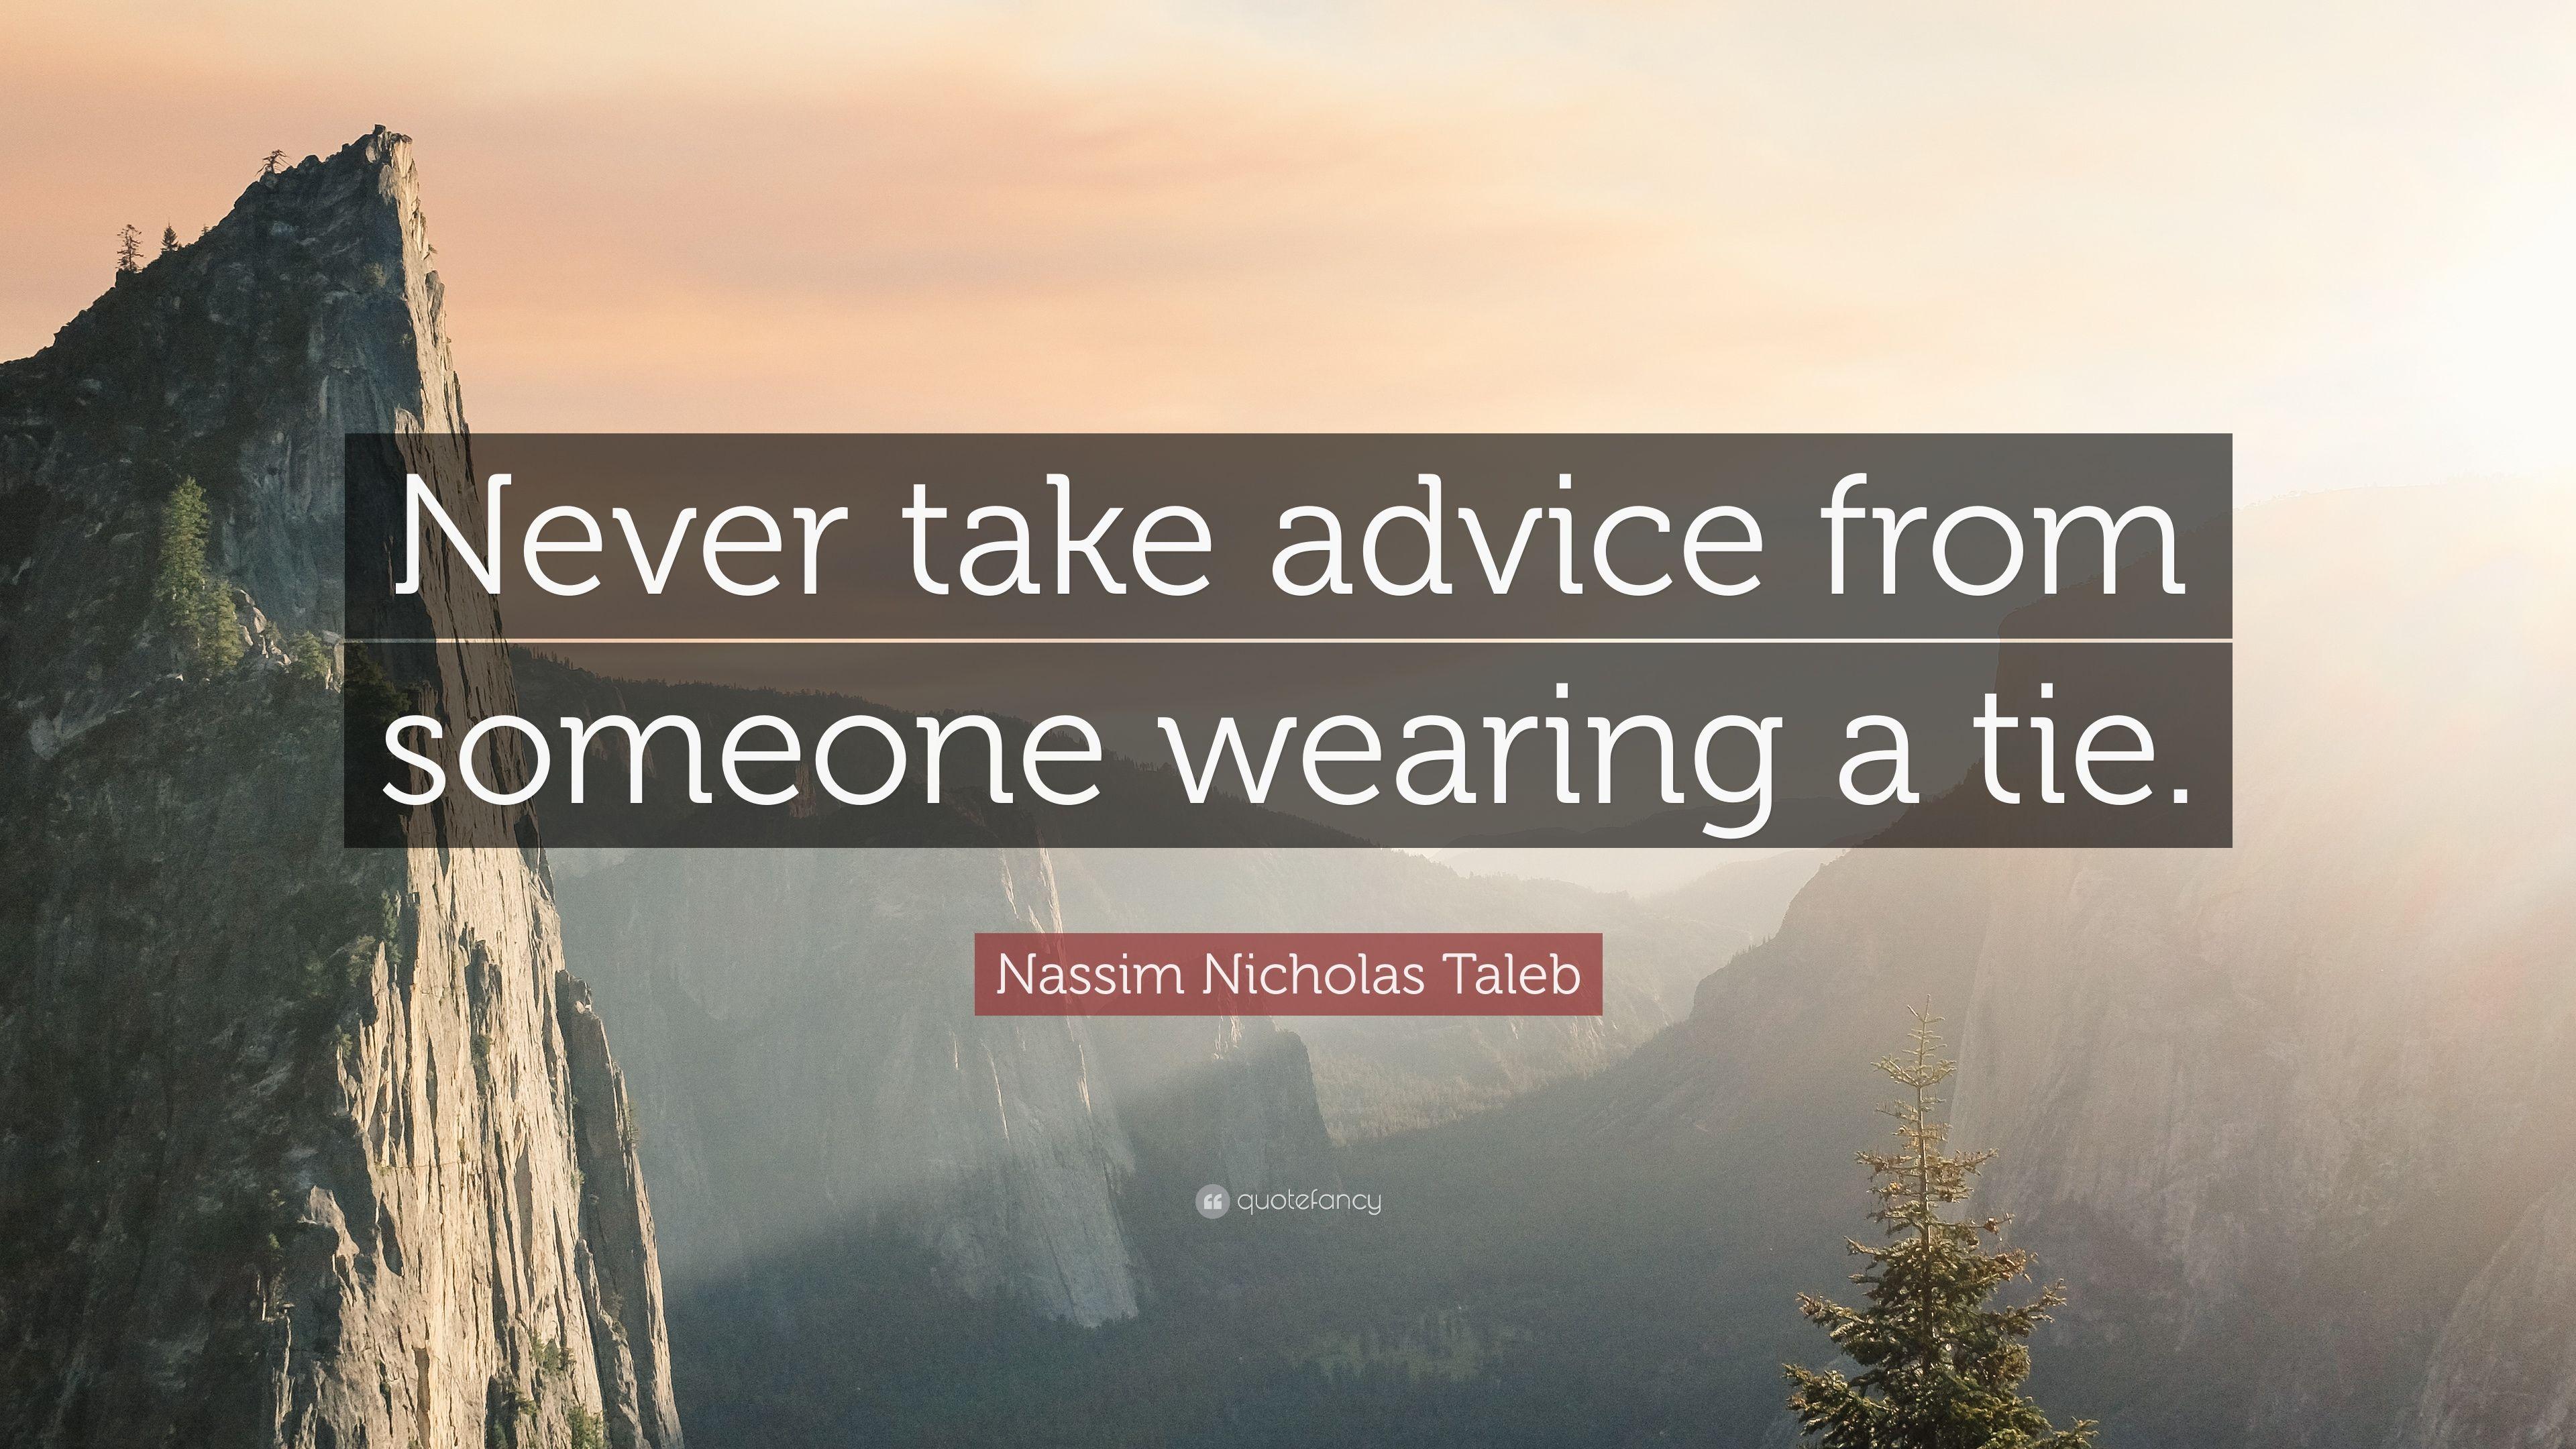 Nassim Nicholas Taleb Quote: “Never take advice from someone